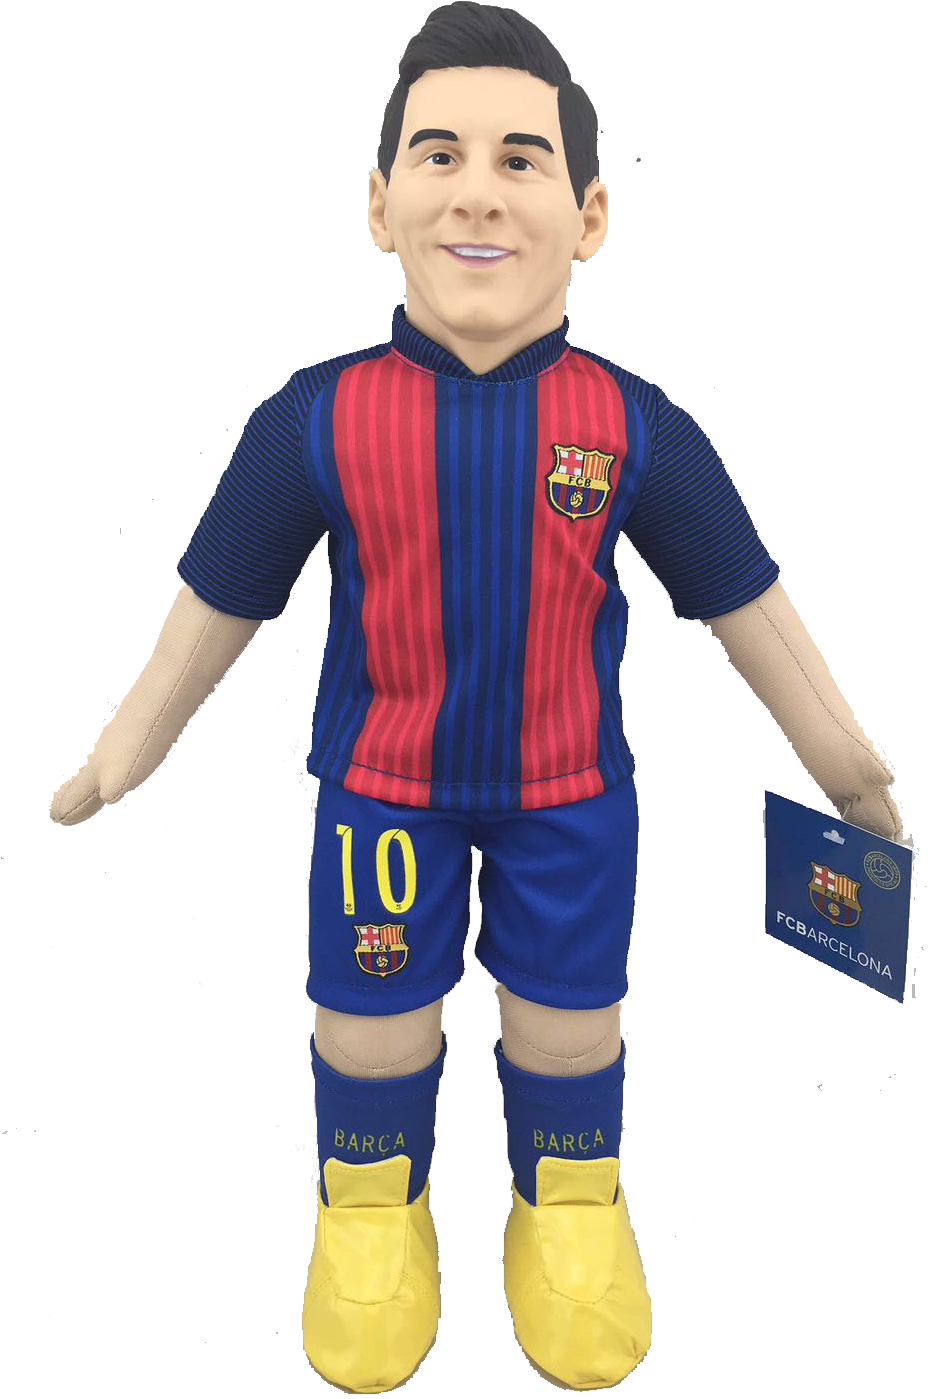 Barcelona Football Player Plush Toy